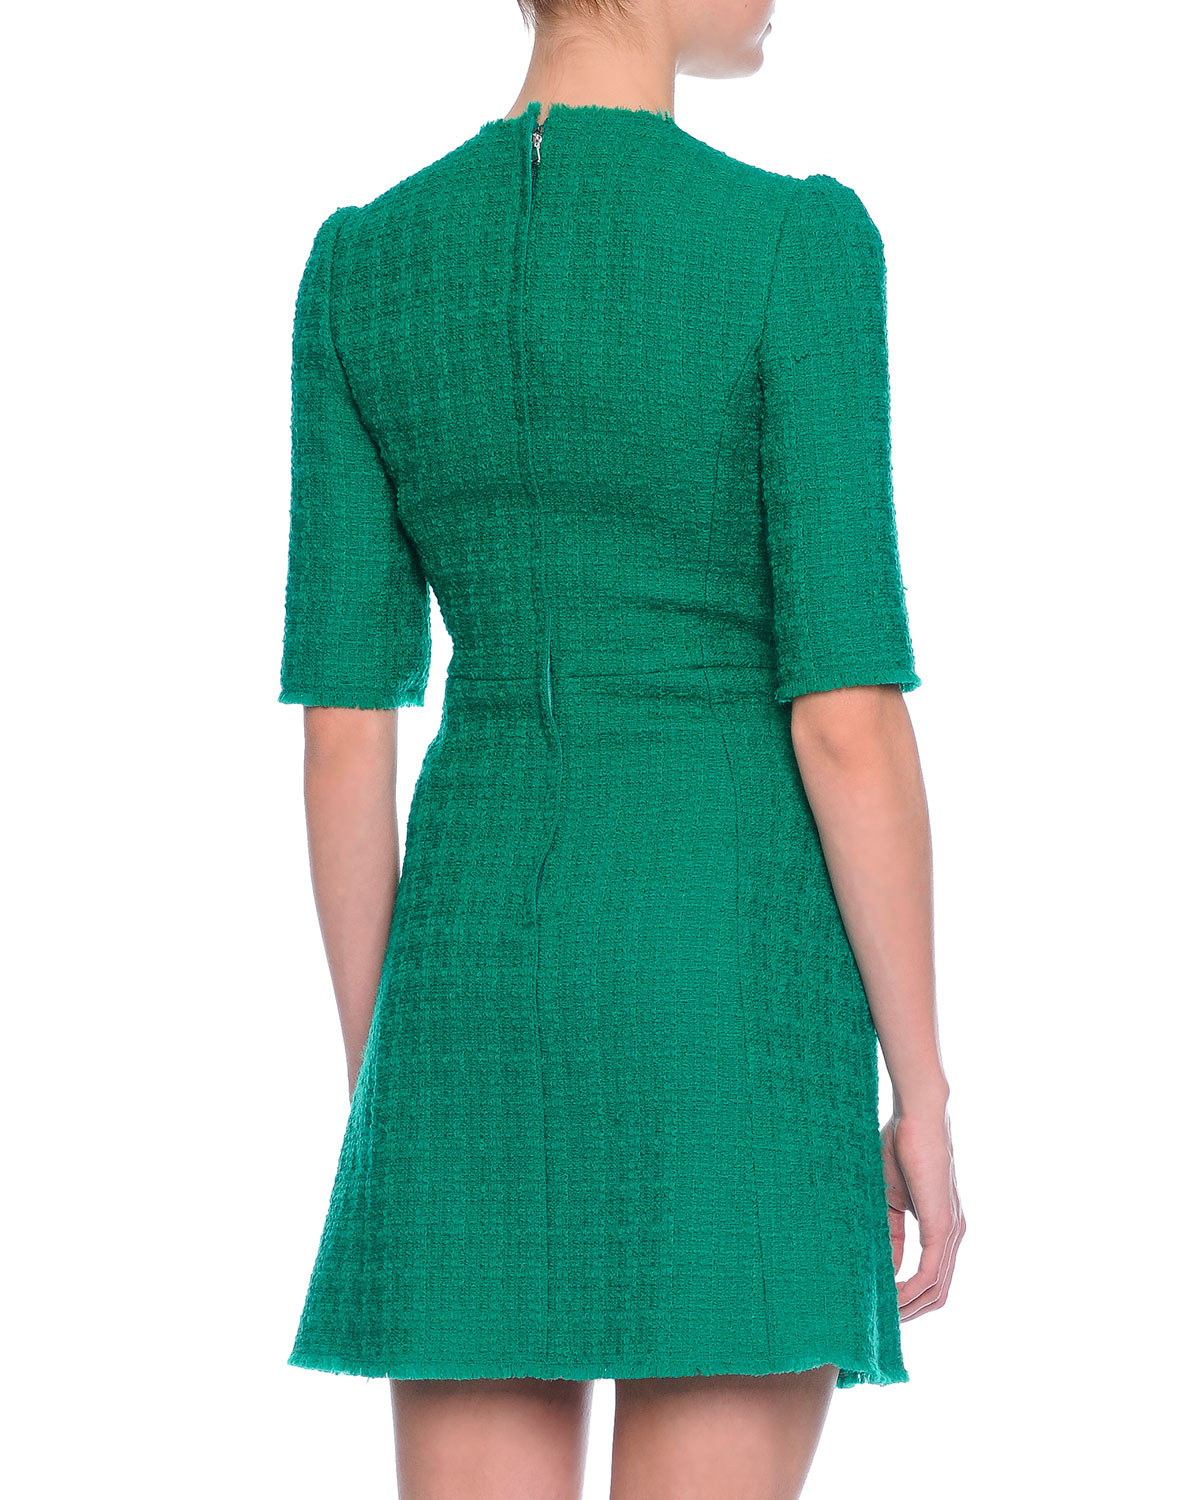 green tweed dress